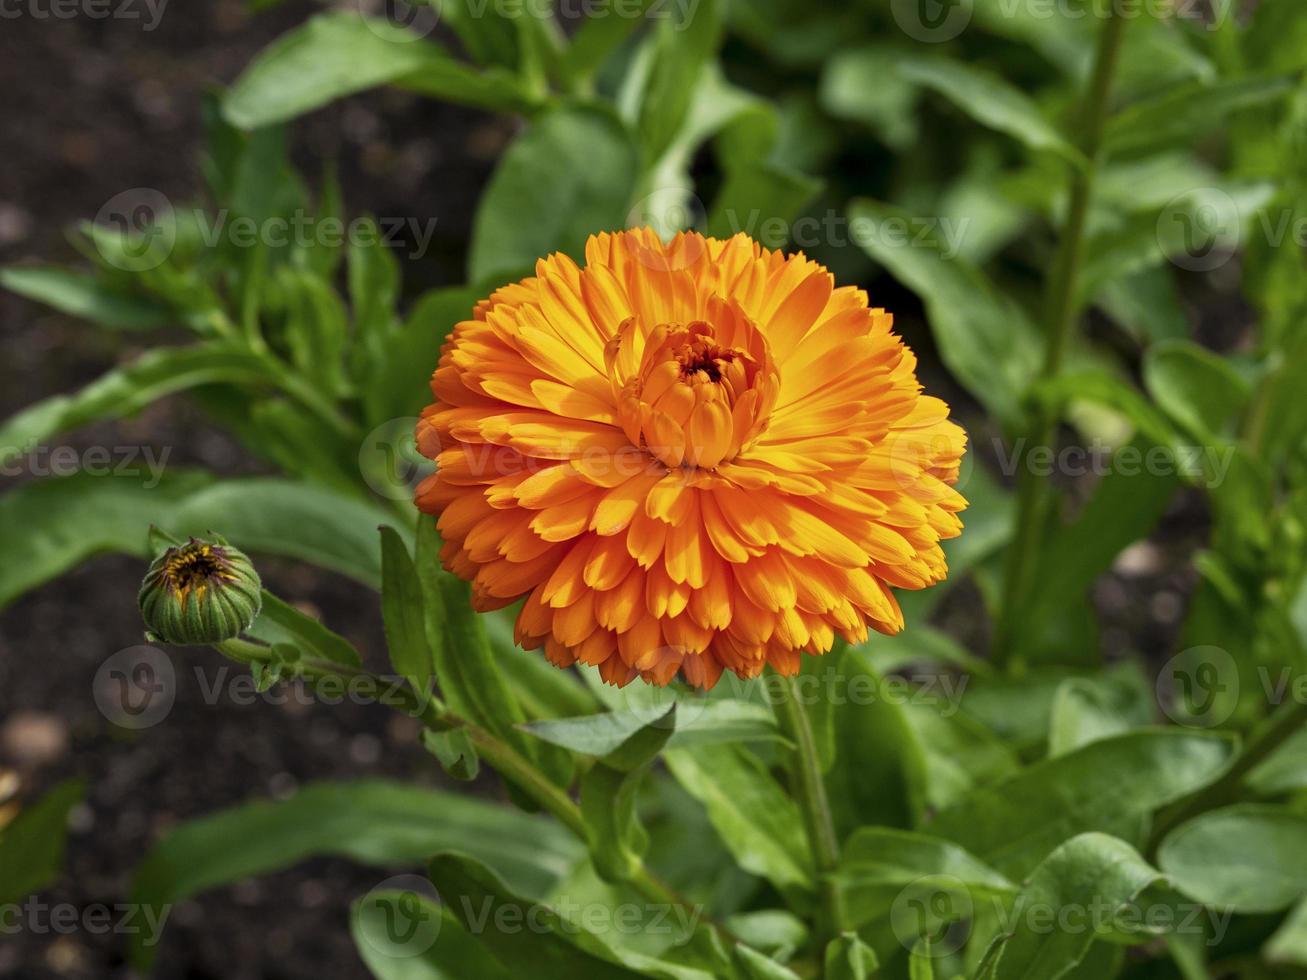 bel fiore e bocciolo di calendula arancione, varietà di calendula twist di agrumi foto